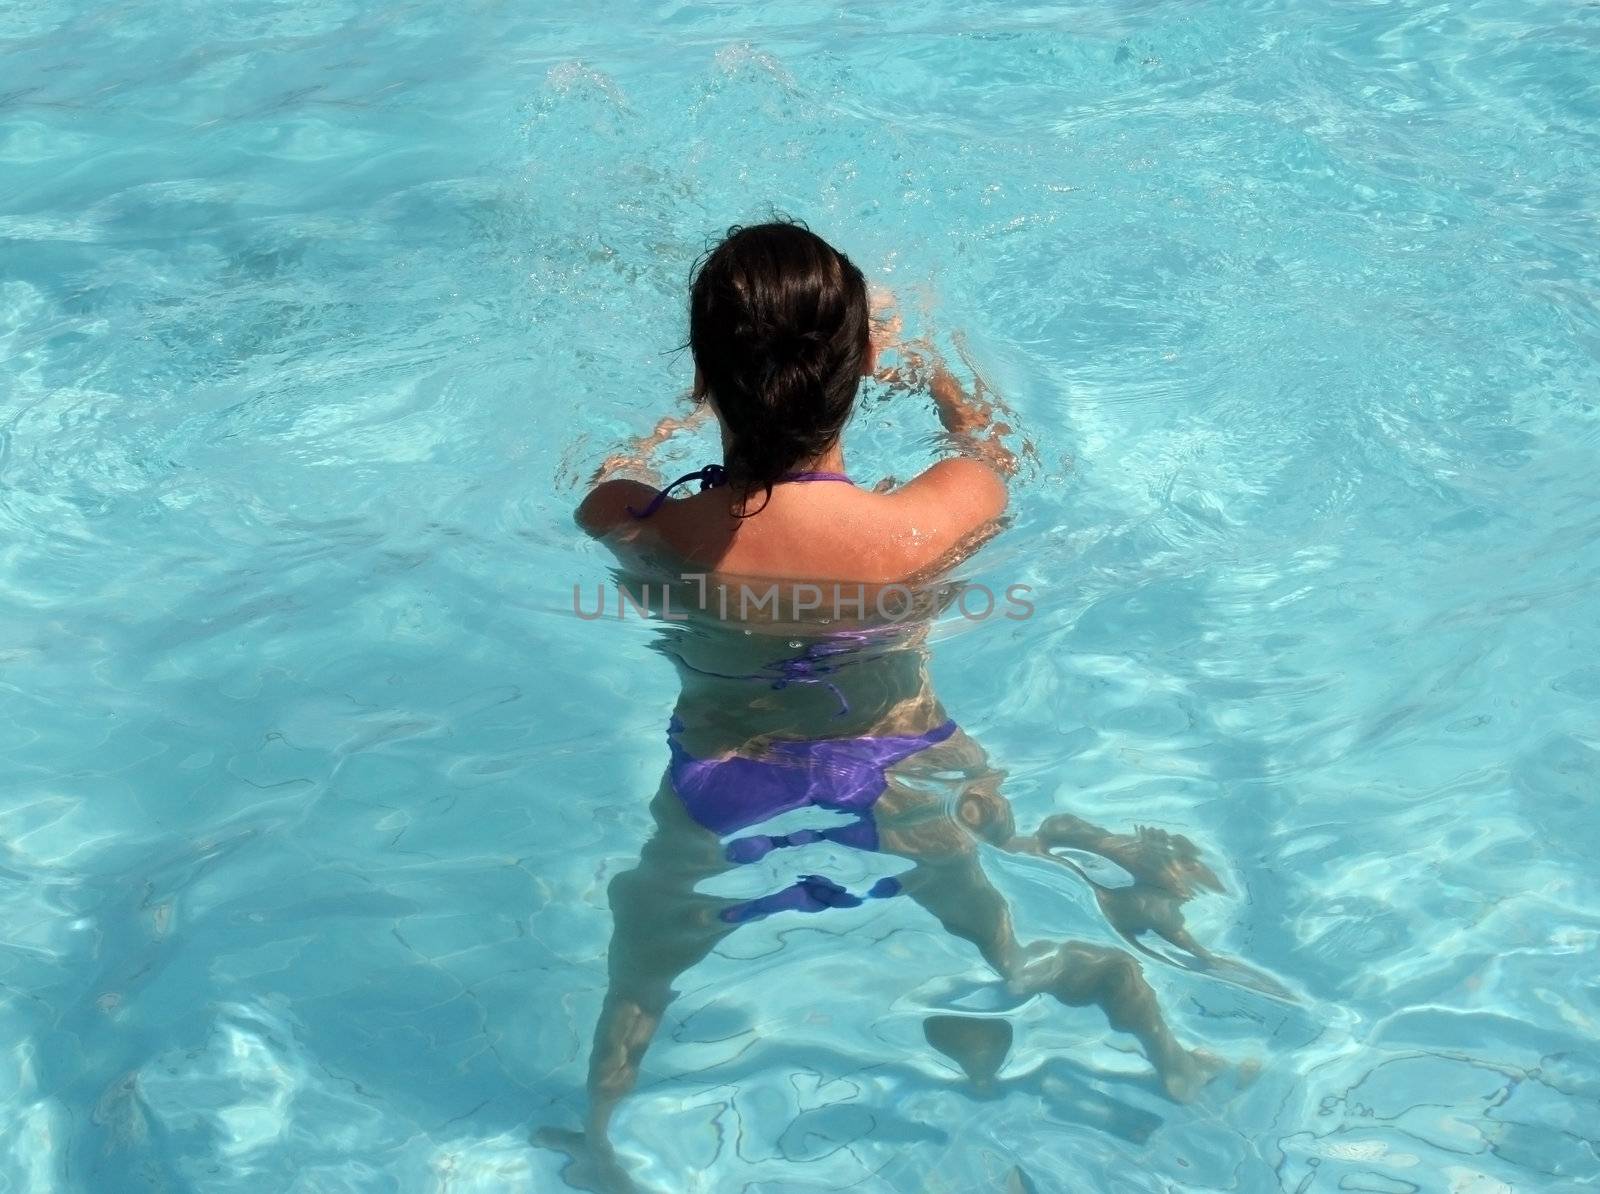 The girl in pool, aerobics in water by Kudryashka